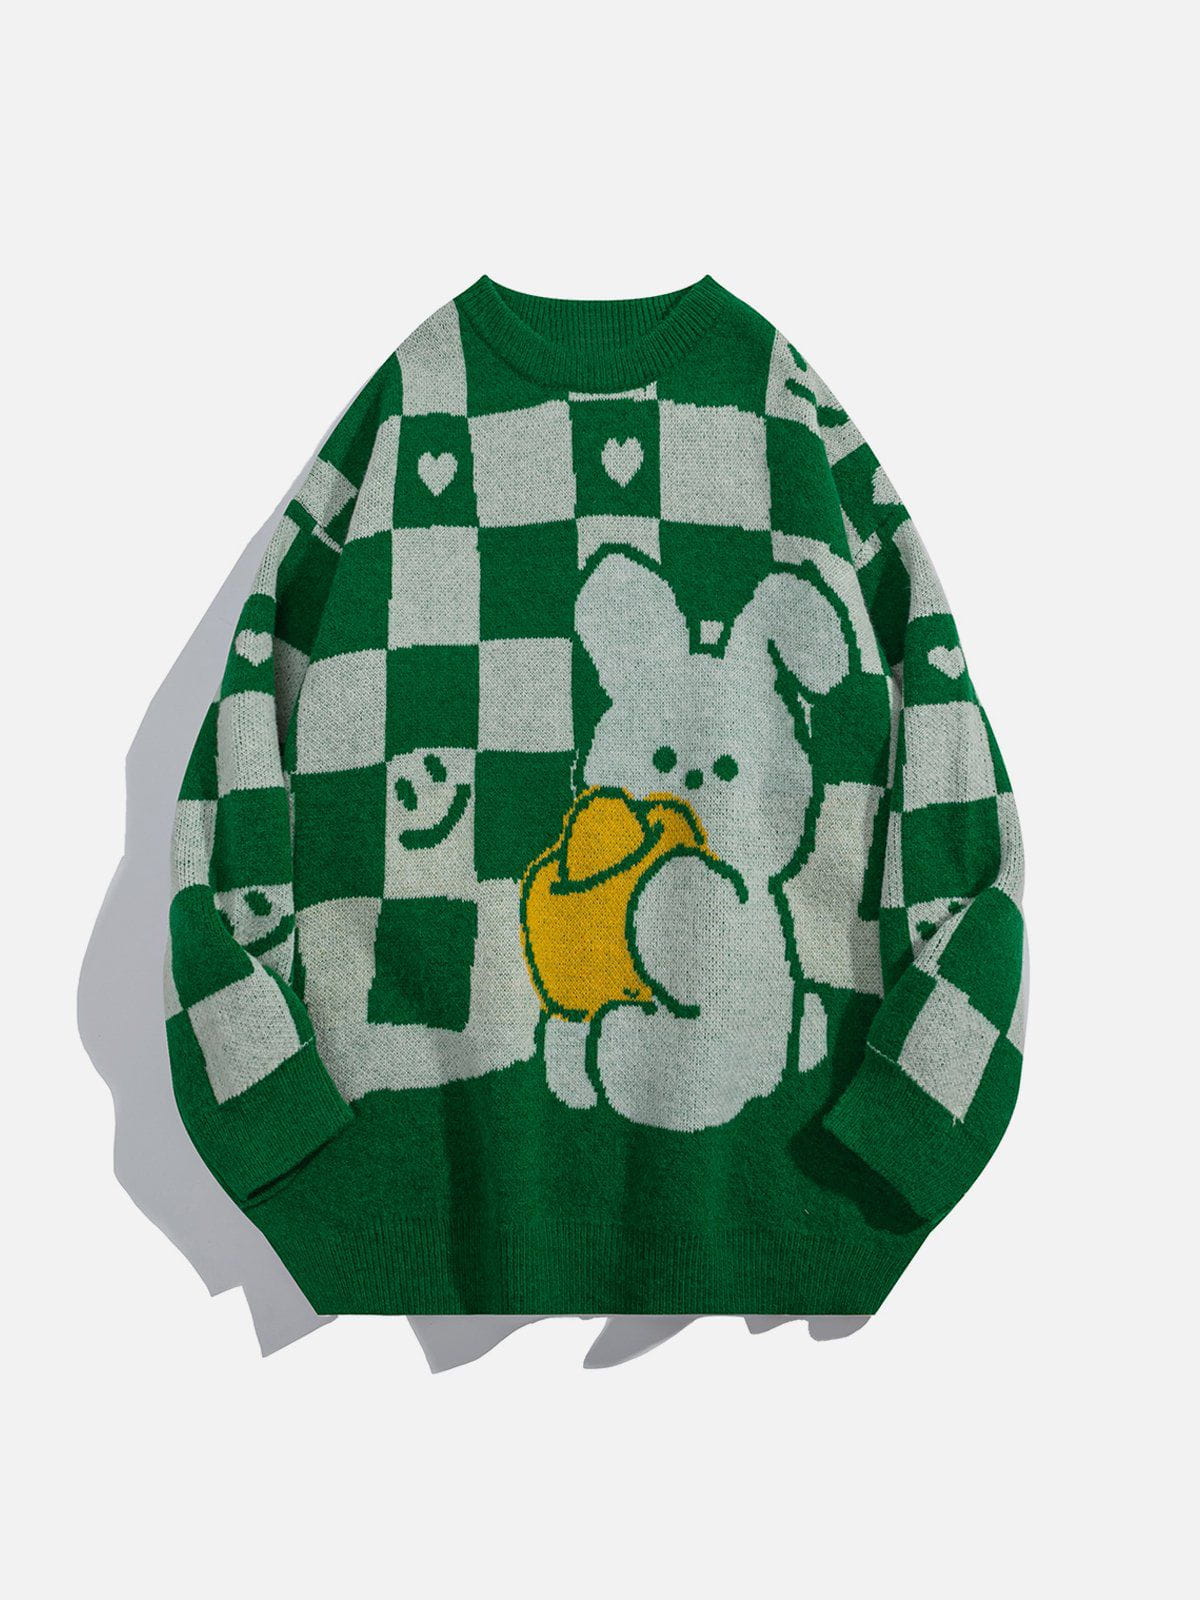 Majesda® - Cute Rabbit Plaid Sweater outfit ideas streetwear fashion